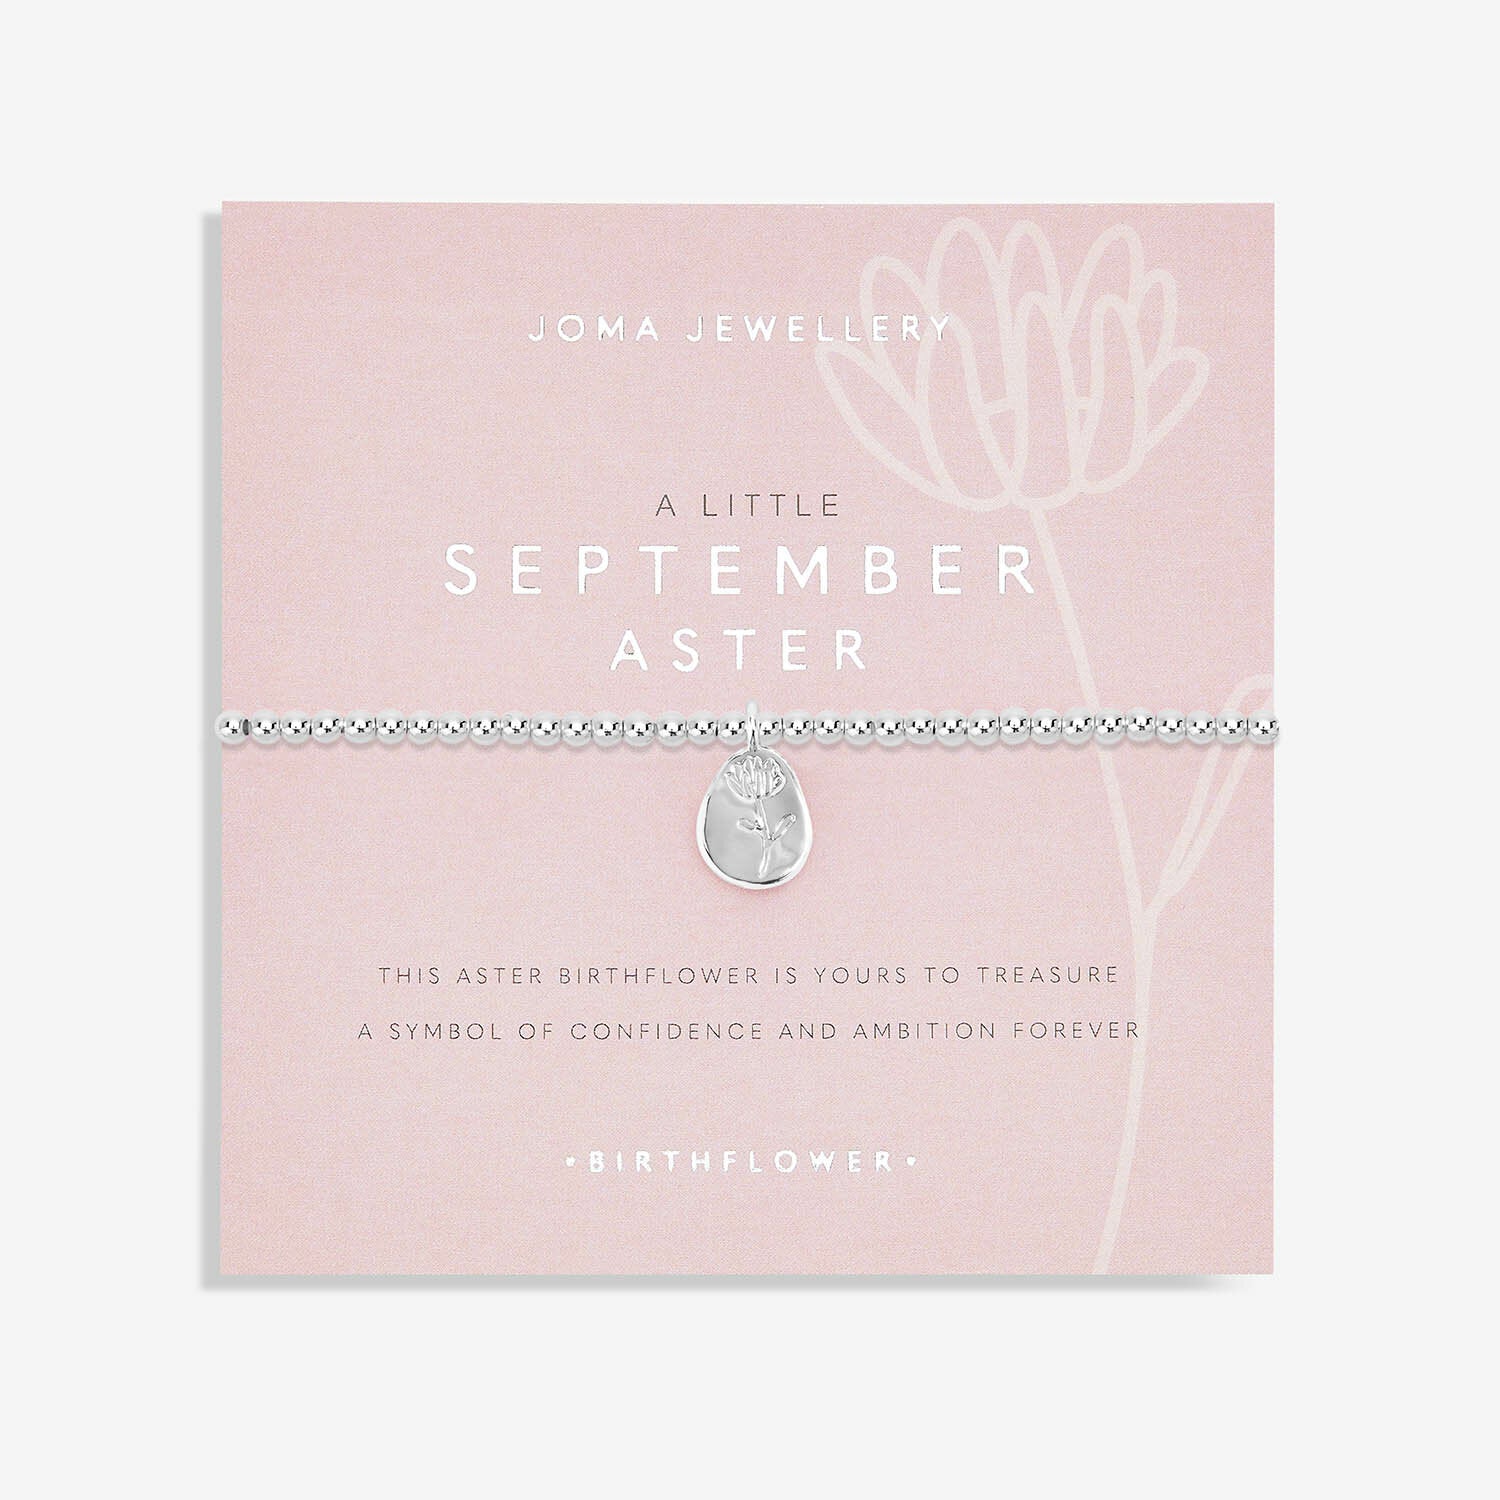 Birthflower - A Little September bracelet - Joma Jewellery